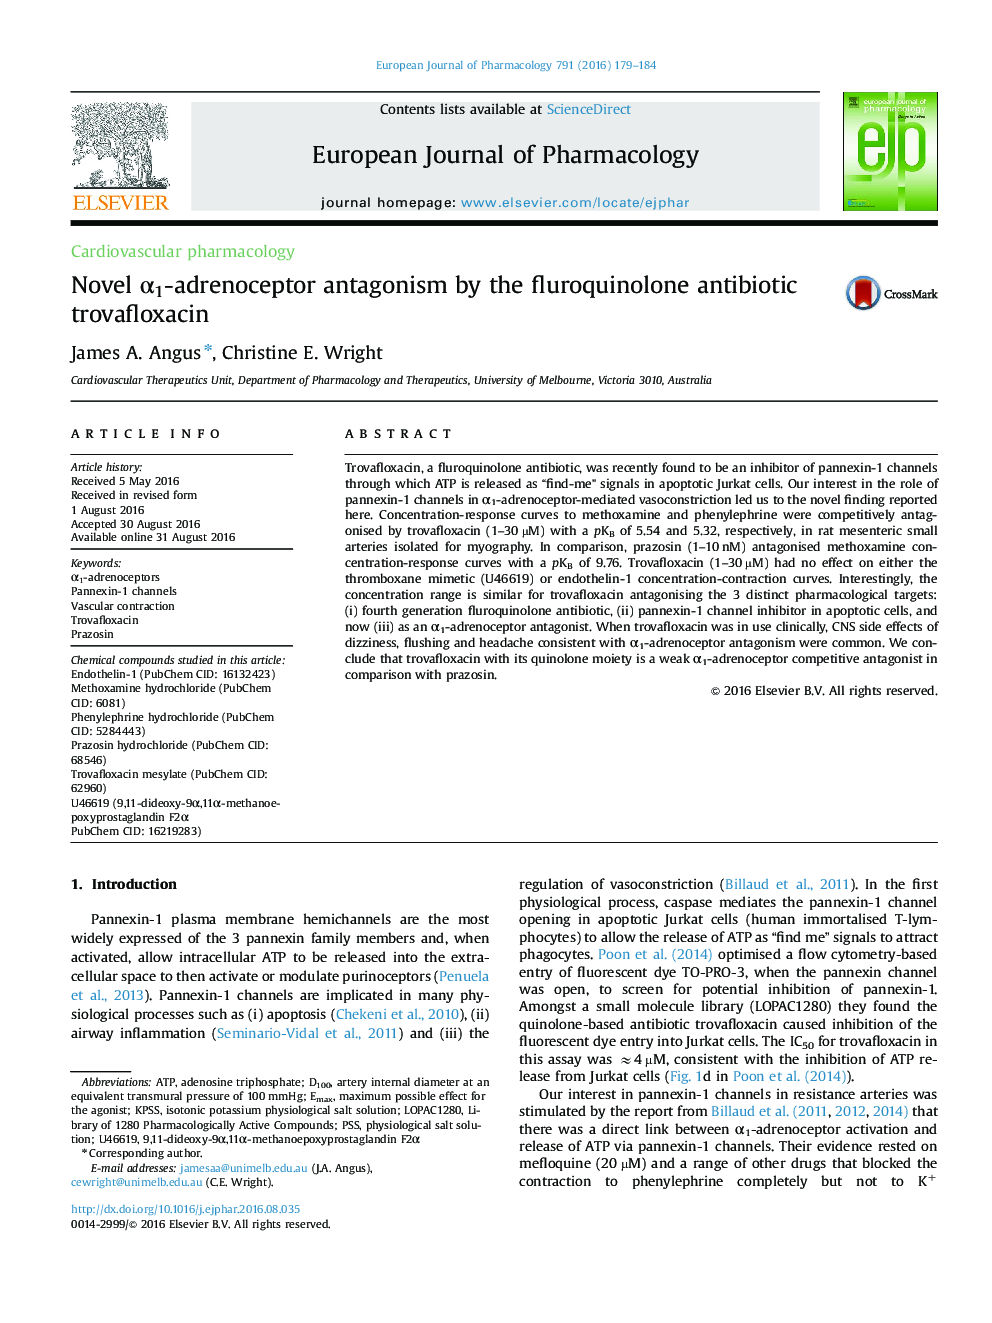 Novel α1-adrenoceptor antagonism by the fluroquinolone antibiotic trovafloxacin